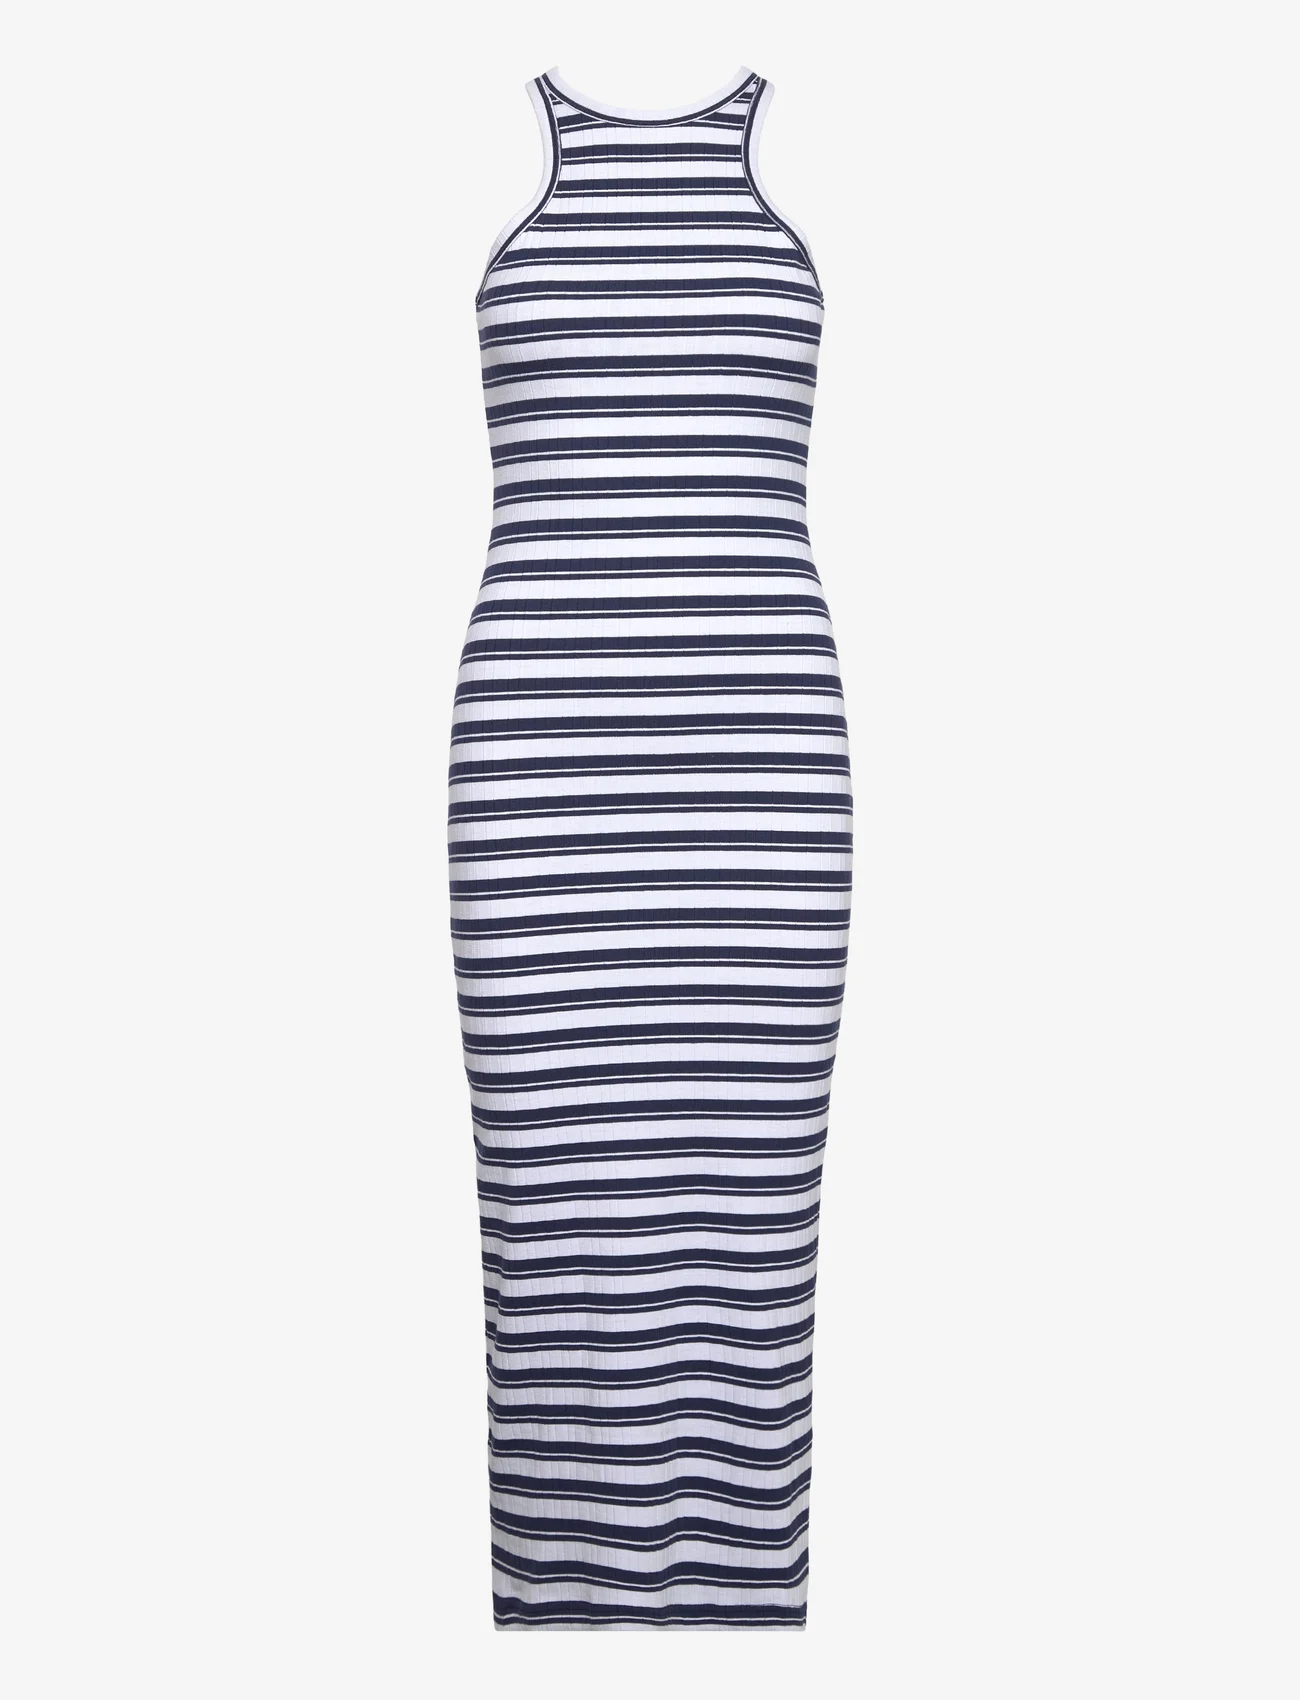 Samsøe Samsøe - Rita dress 14806 - maxikjoler - stripes blue - 0